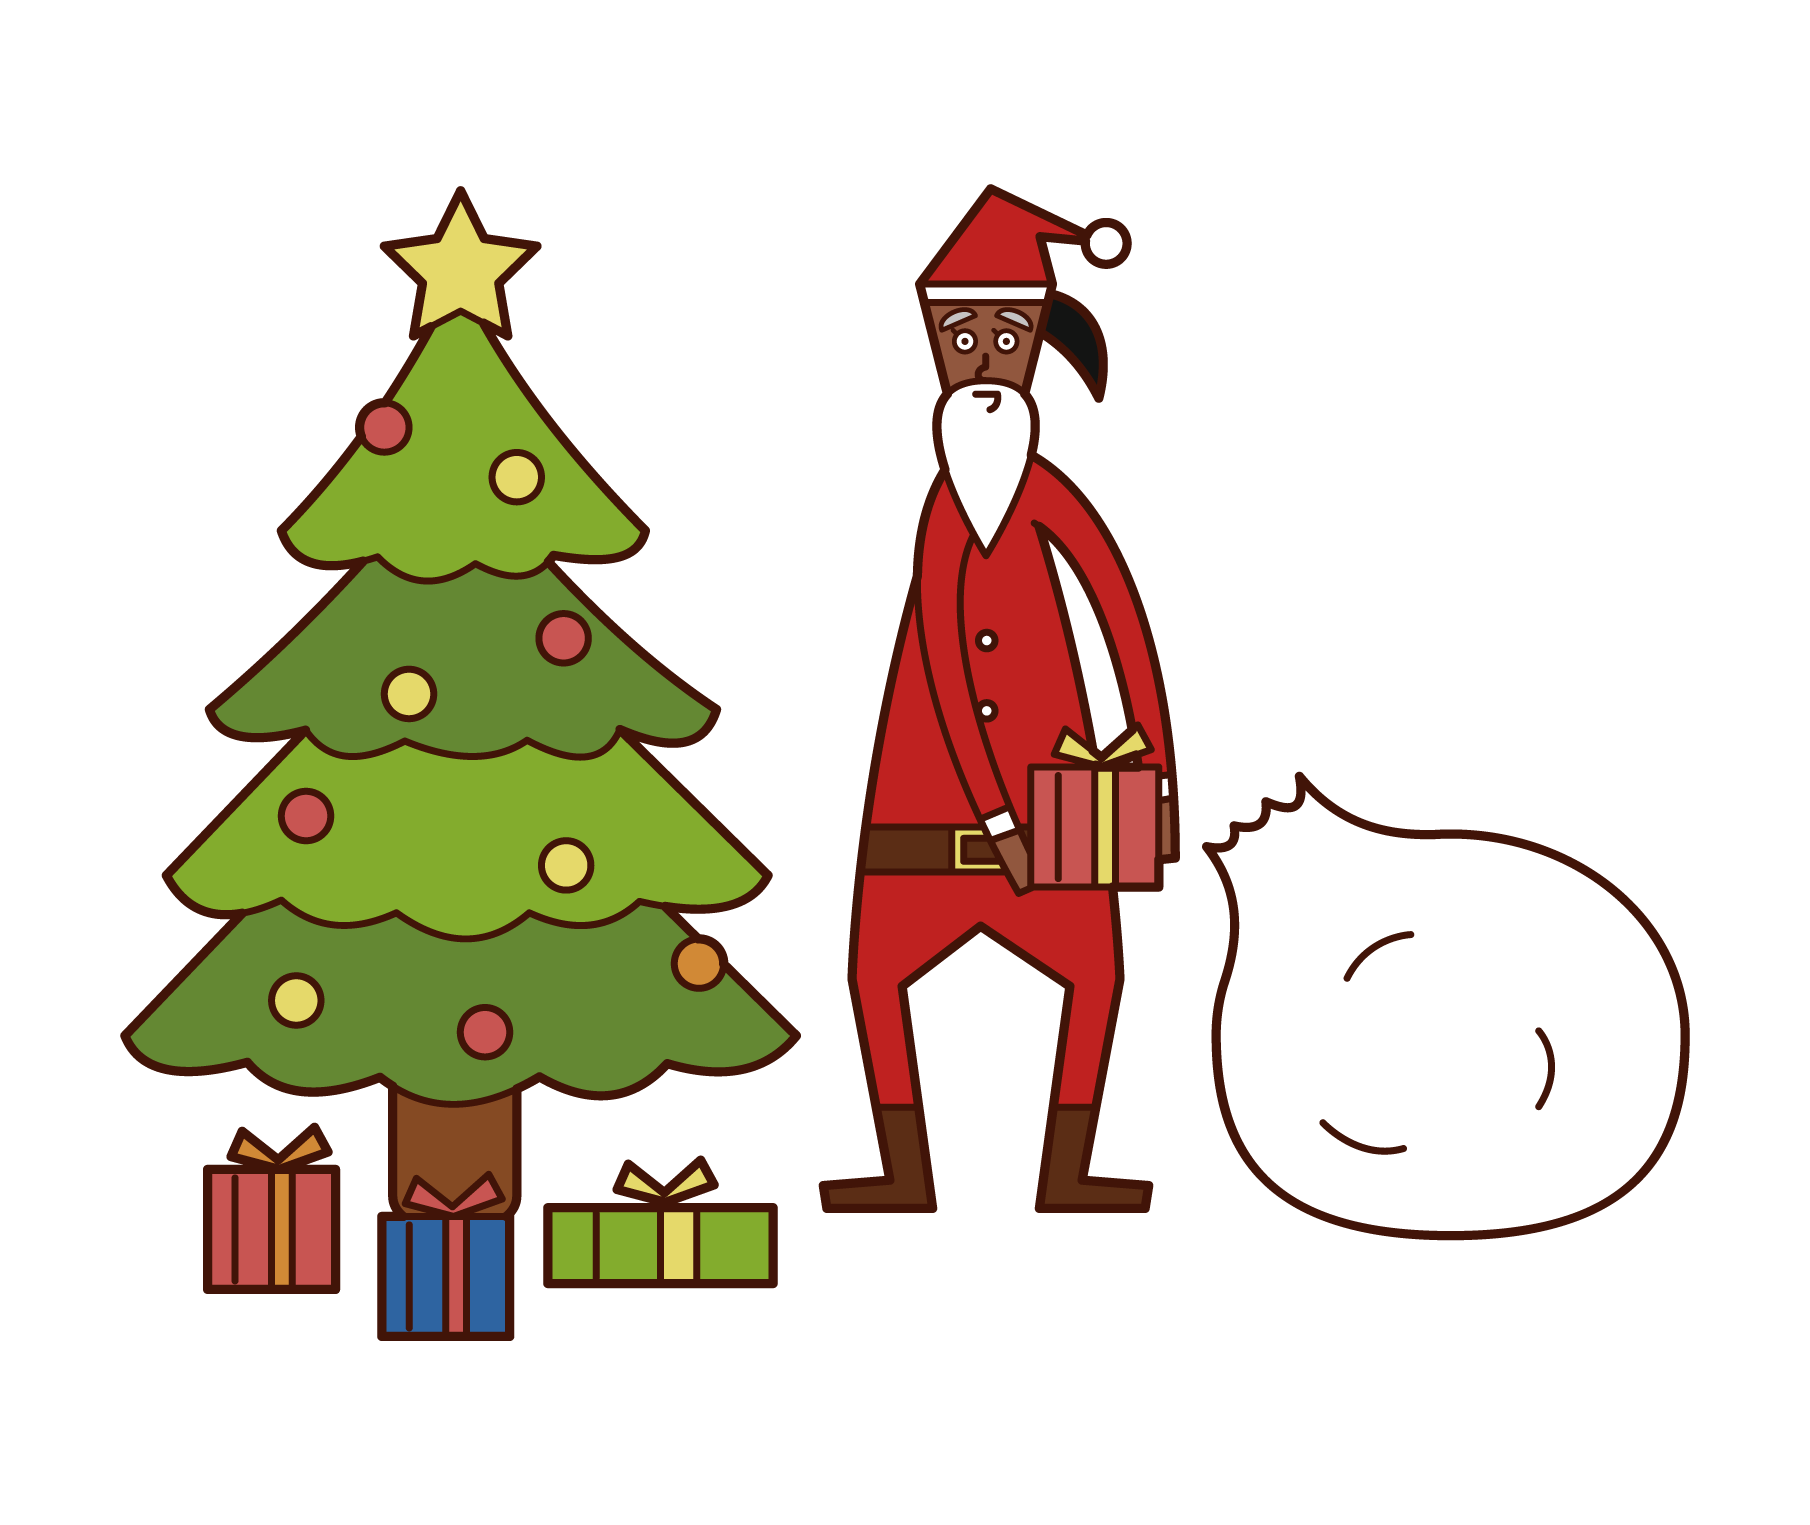 Illustration of Santa Claus (woman) arranging presents under a Christmas tree